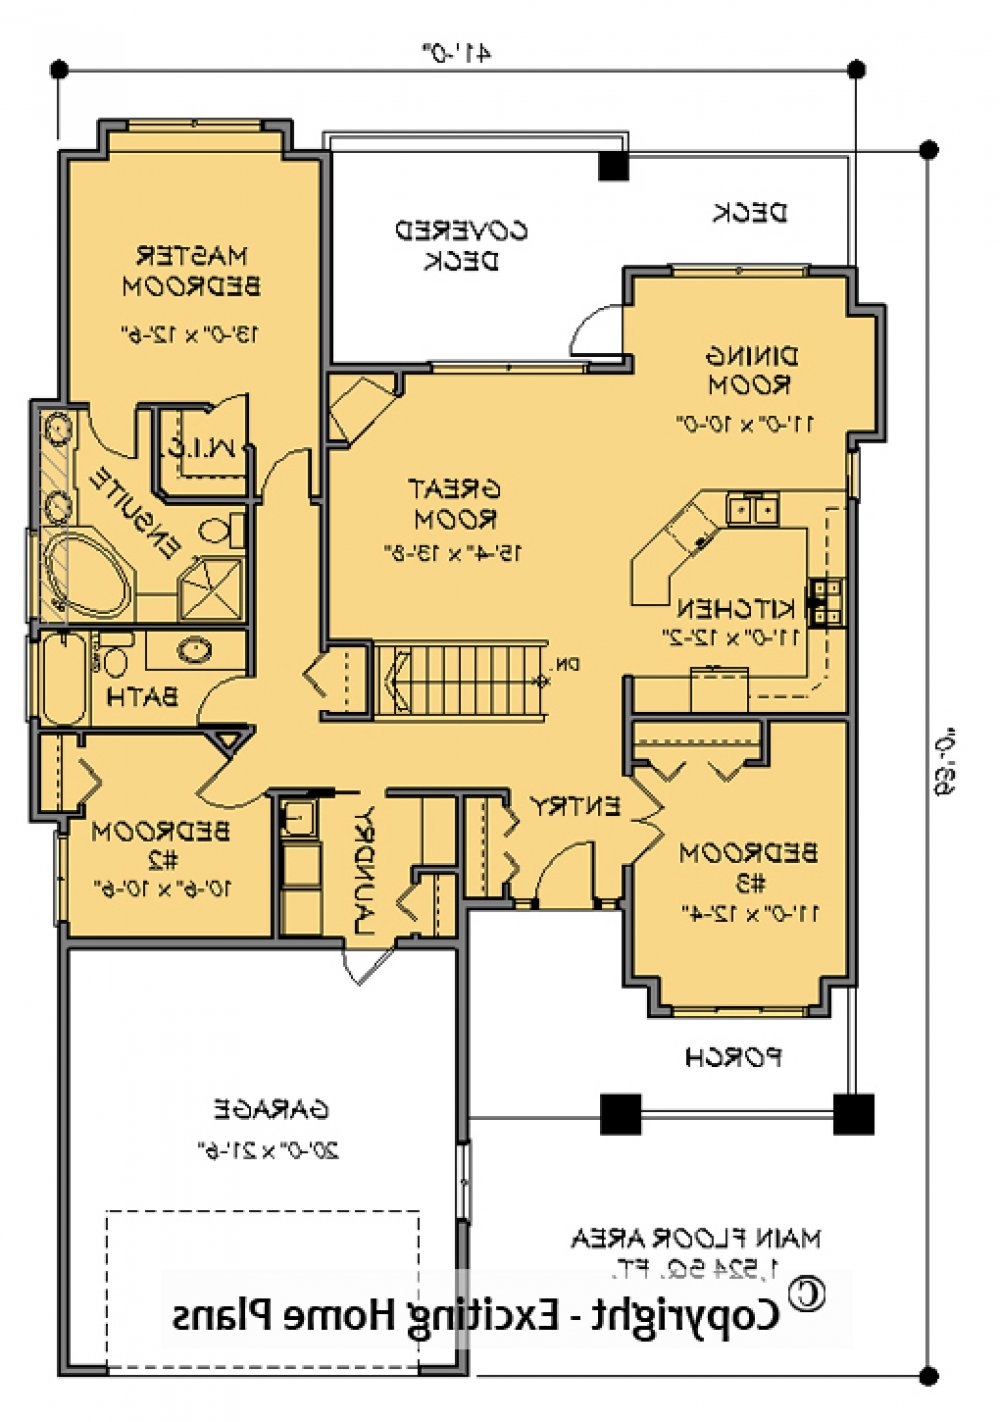 House Plan E1584-10  Main Floor Plan REVERSE